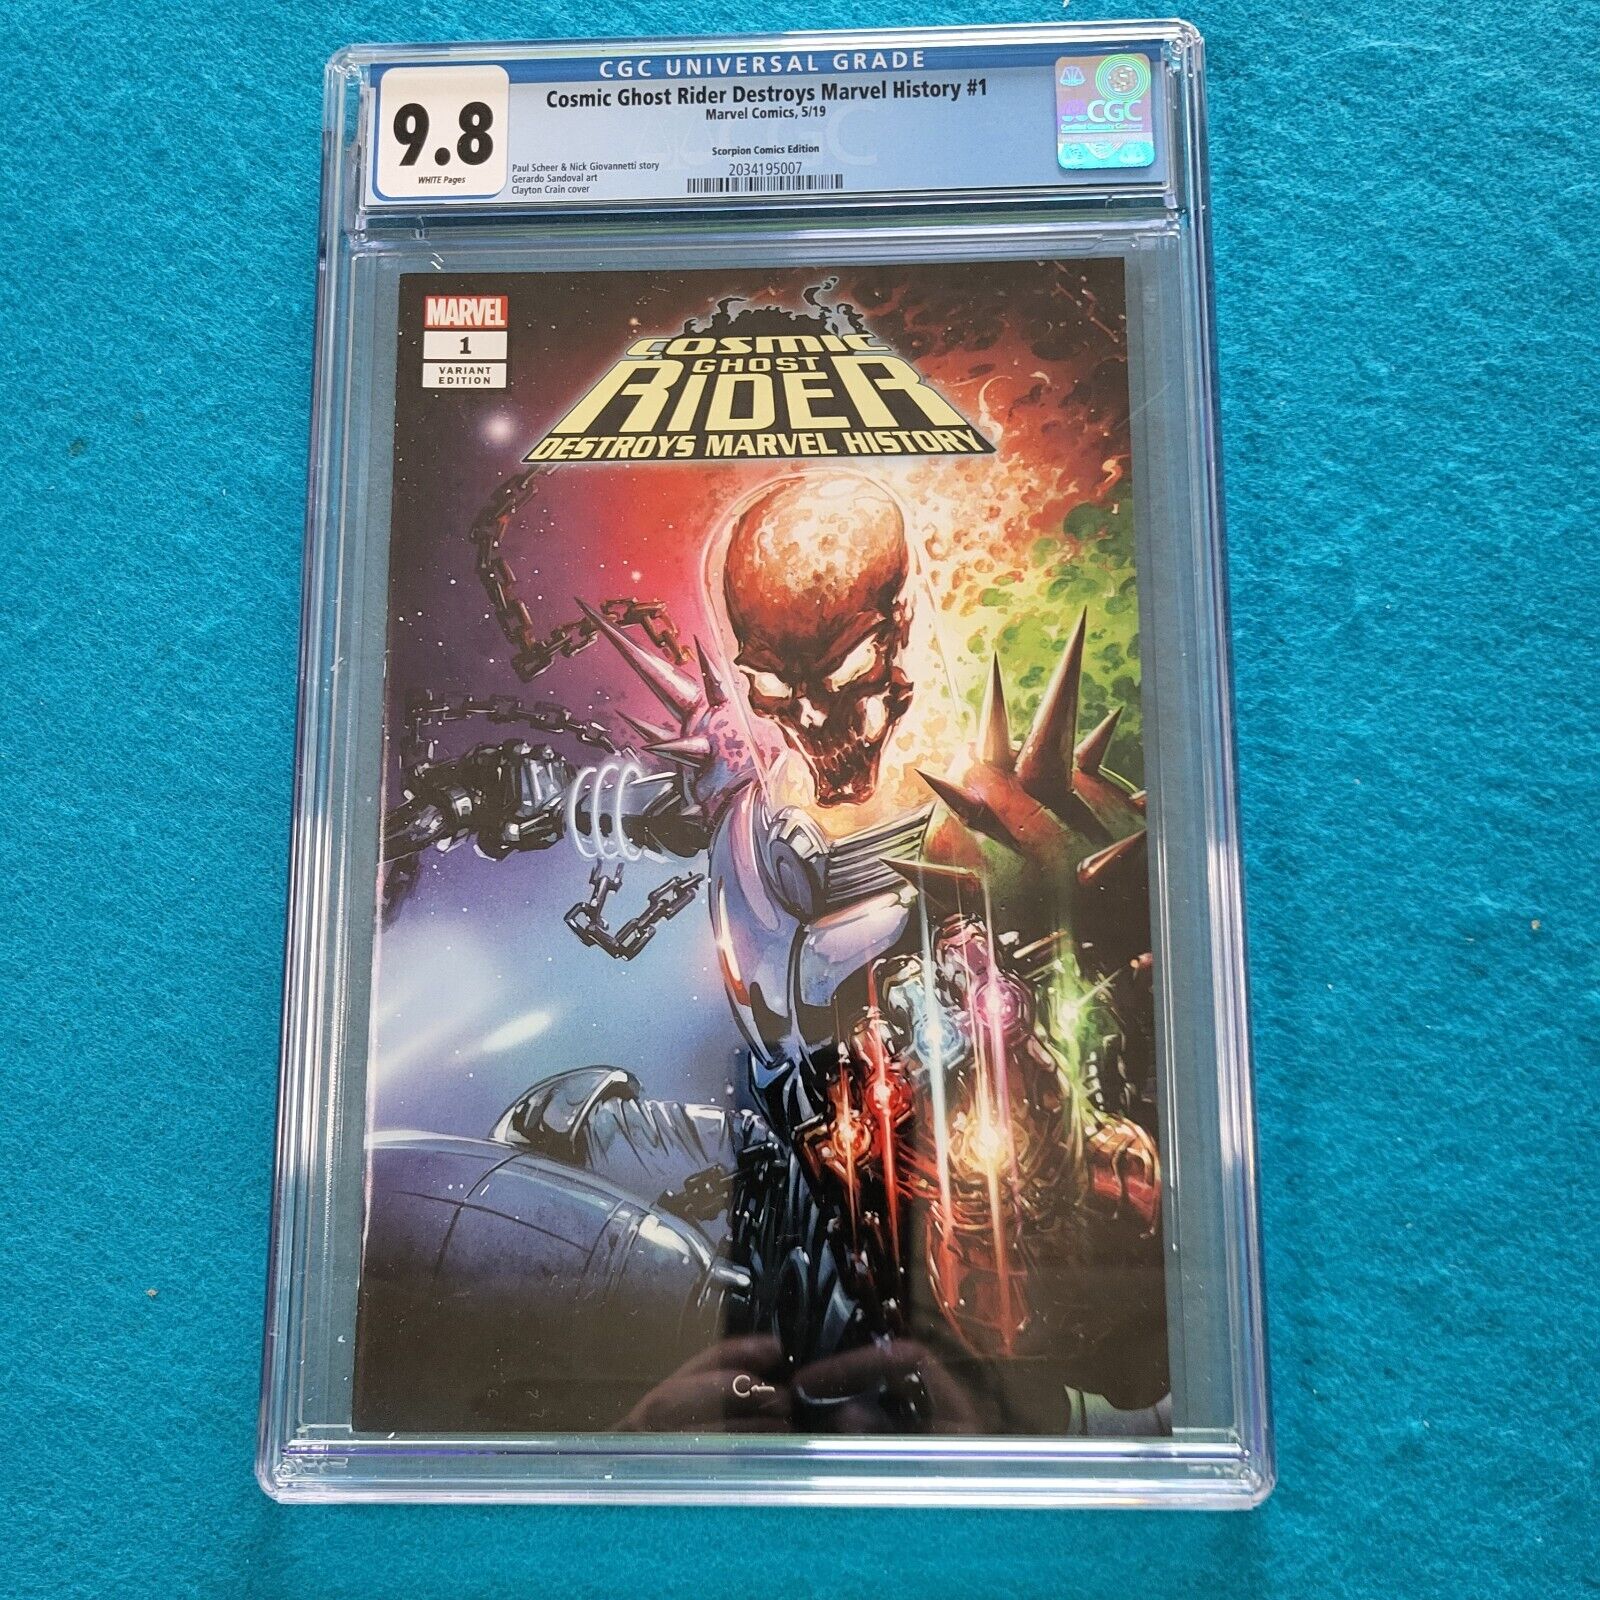 Cosmic Ghost Rider Destroys Marvel History #1 -Scorpion Comics Edition